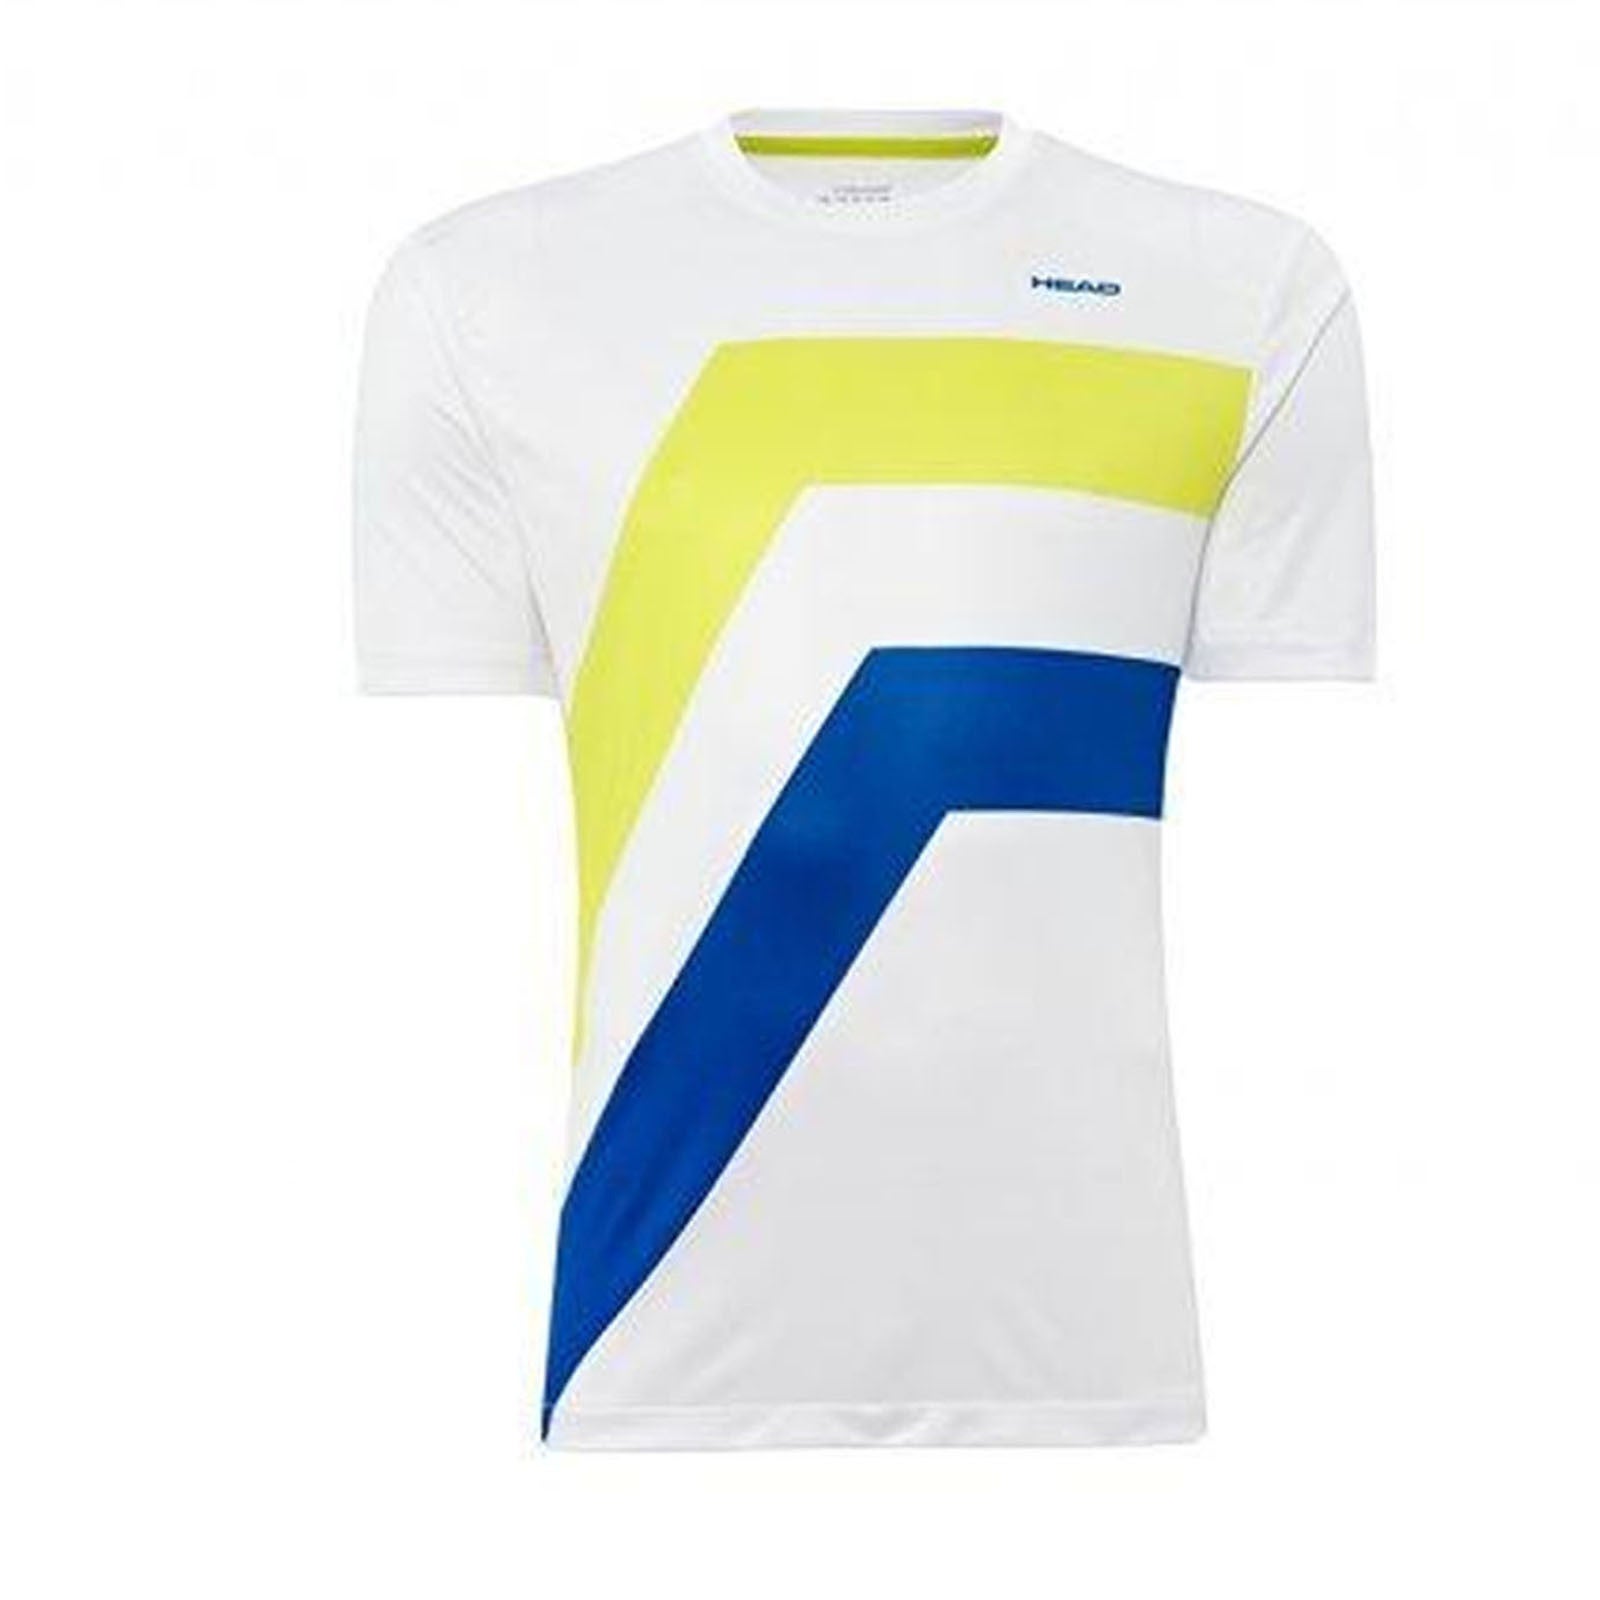 Head Boys Youth Dive Top T-Shirt Tee Tennis Shirt - White/Lime 